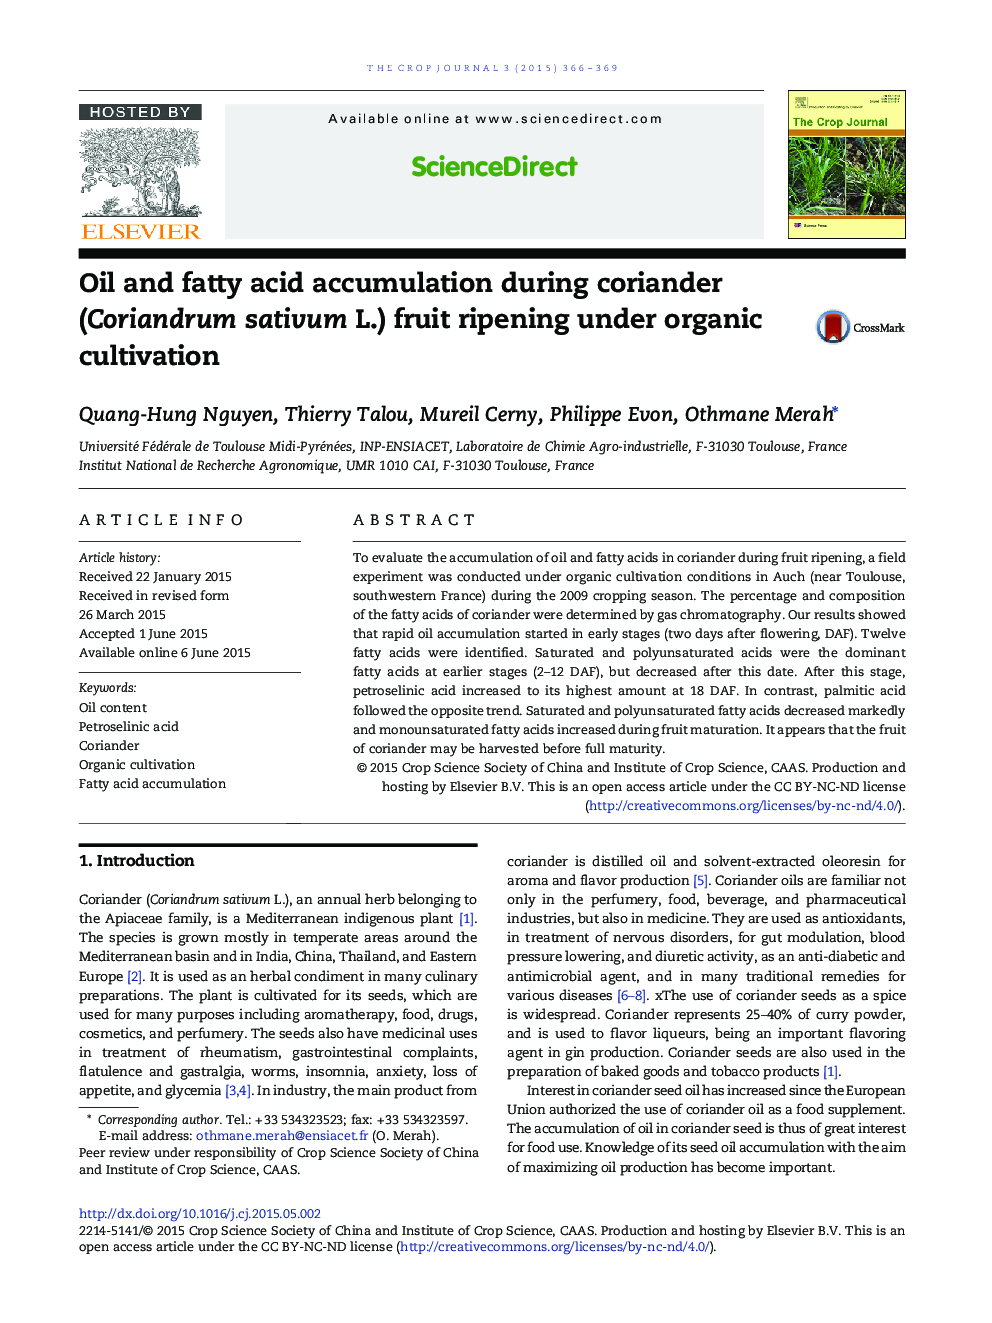 Oil and fatty acid accumulation during coriander (Coriandrum sativum L.) fruit ripening under organic cultivation 